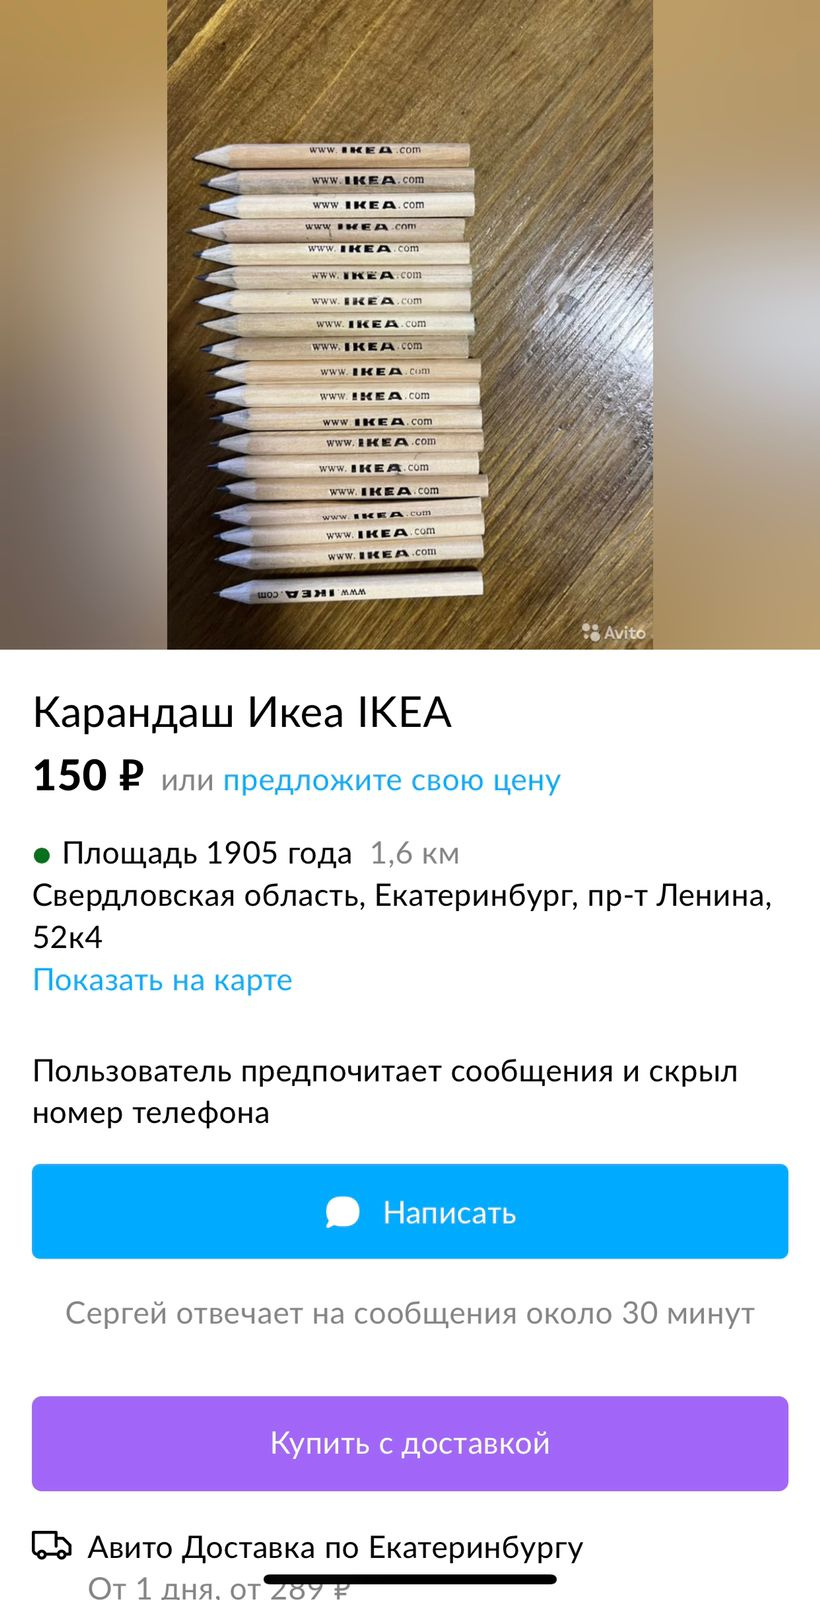 Карандаши из IKEA продают по 150 рублей за штуку